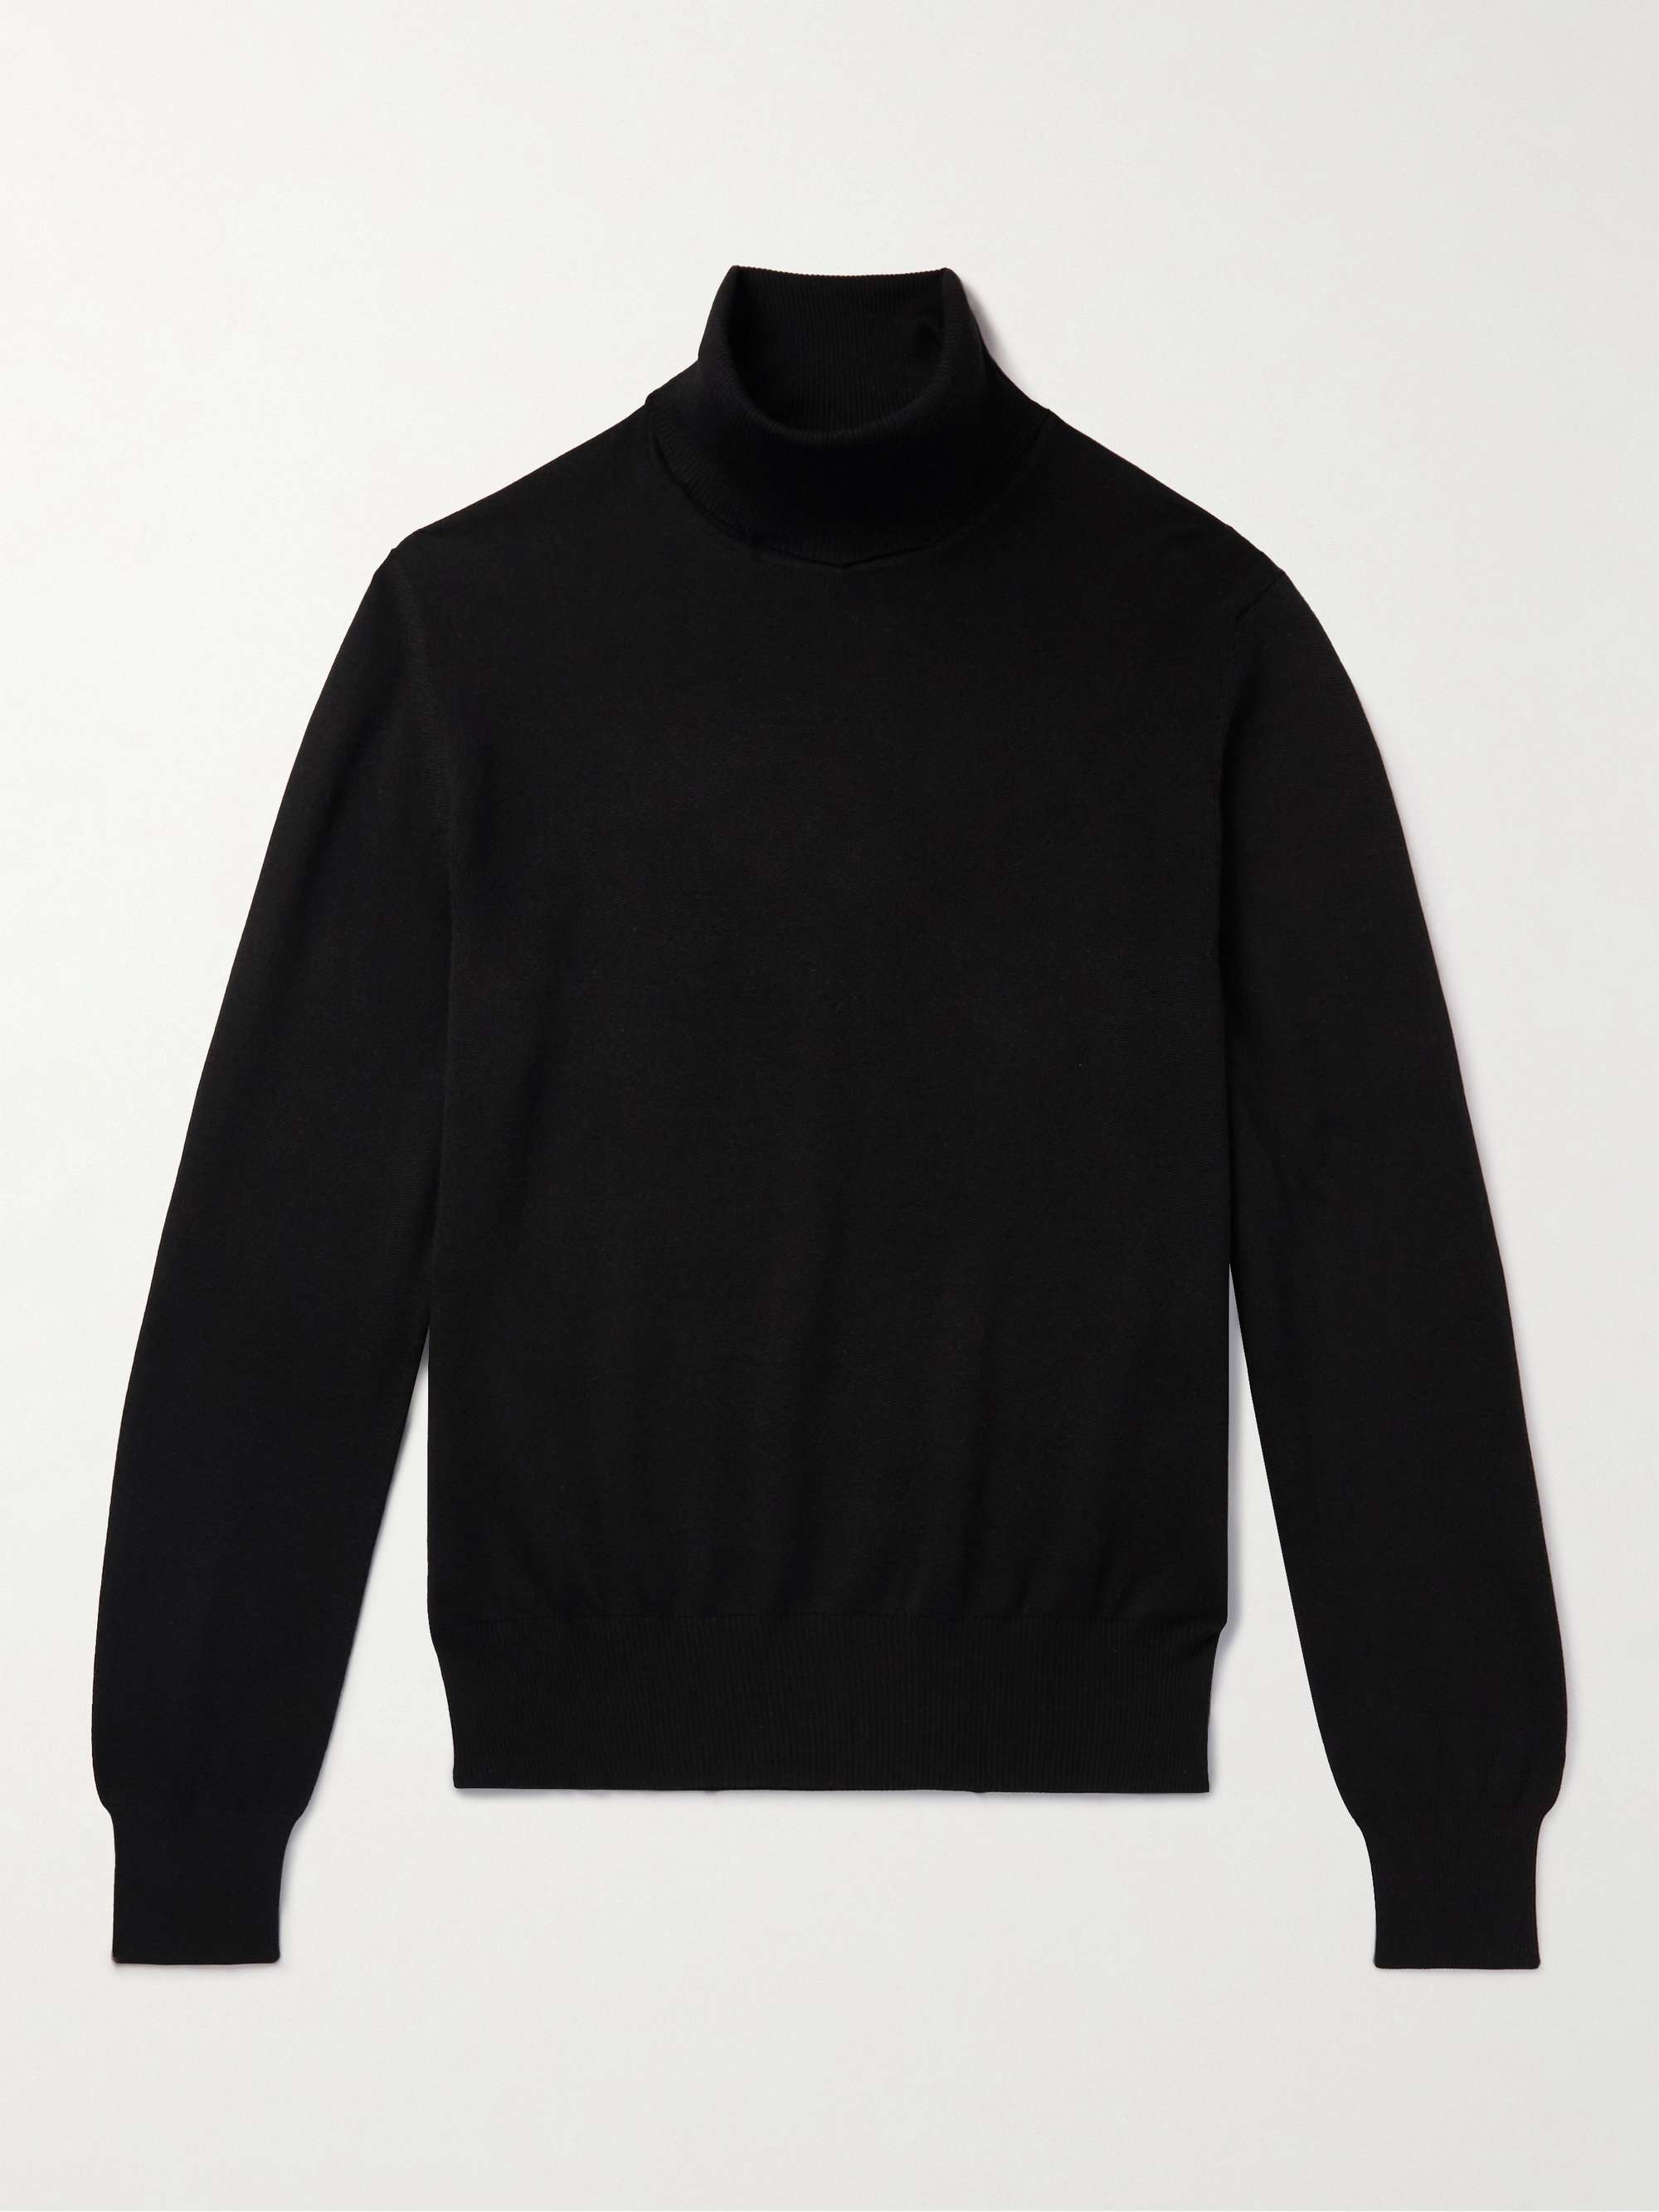 TOM FORD Mulberry Silk Rollneck Sweater for Men | MR PORTER